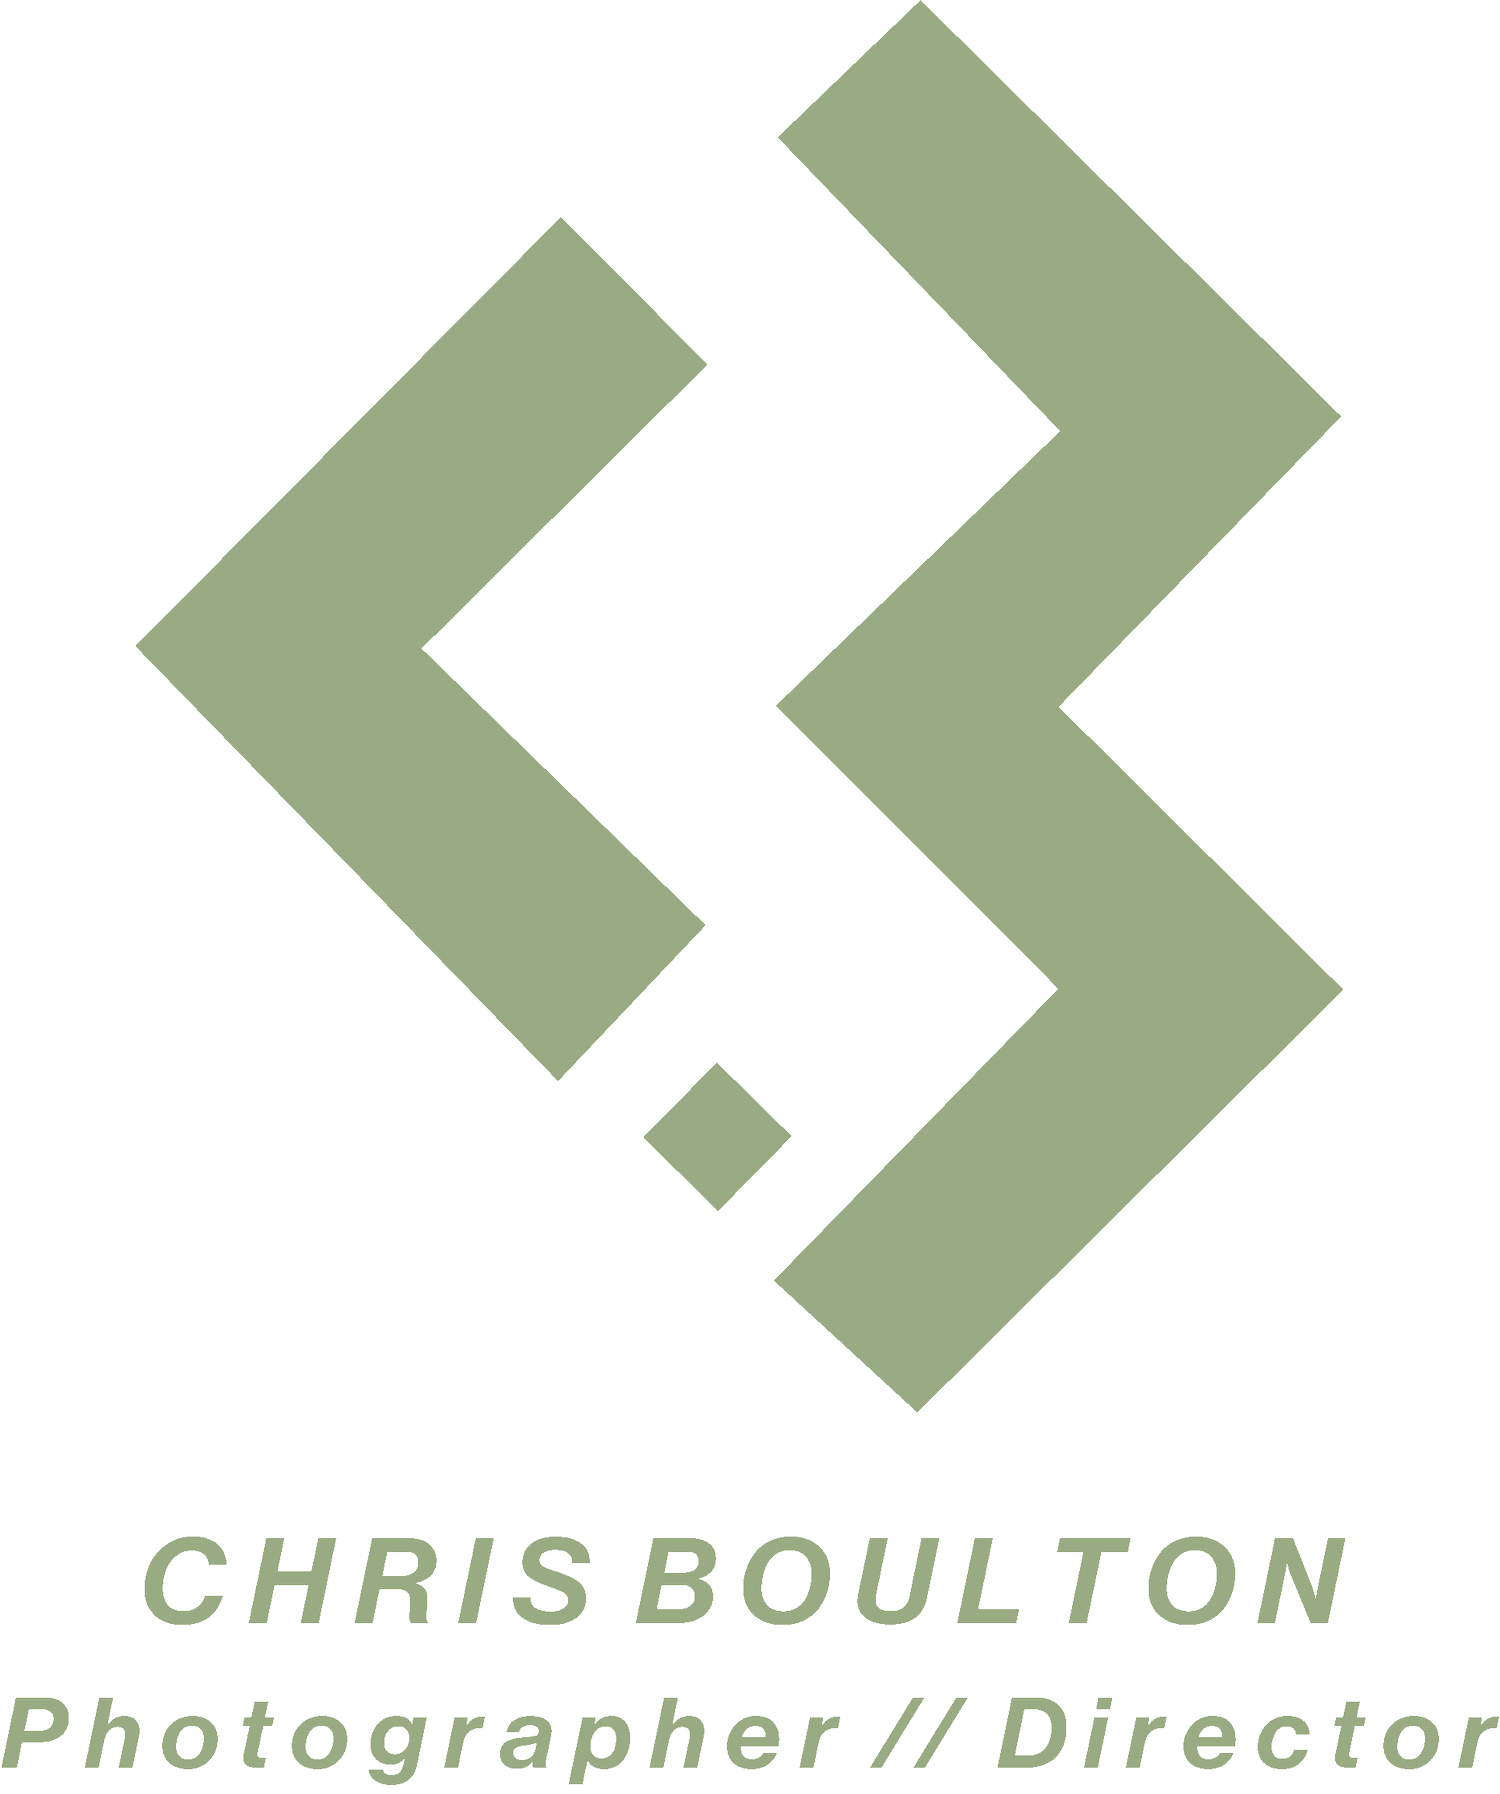 Chris Boulton Photographer // Director